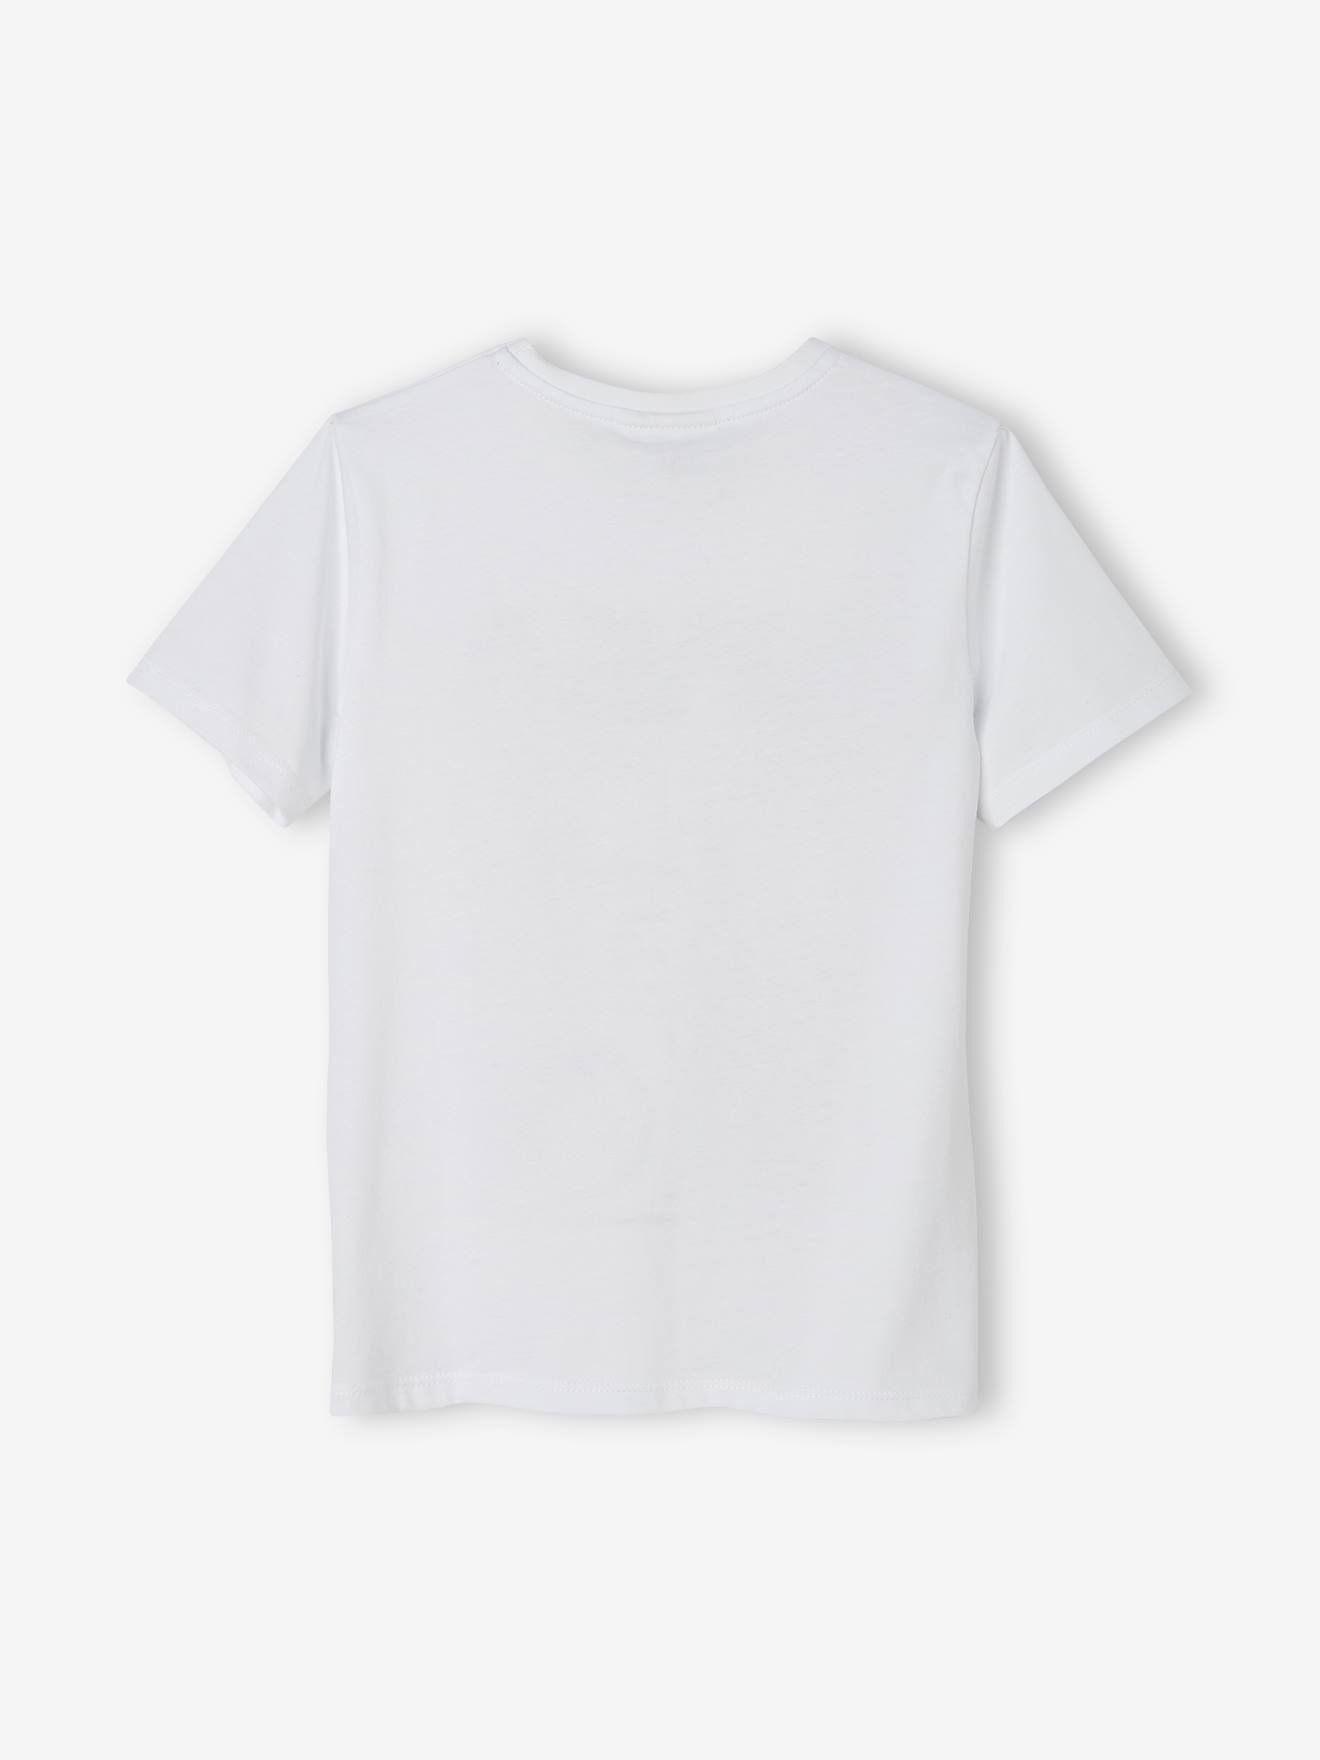 NASA® T-Shirt for Boys Boys - white